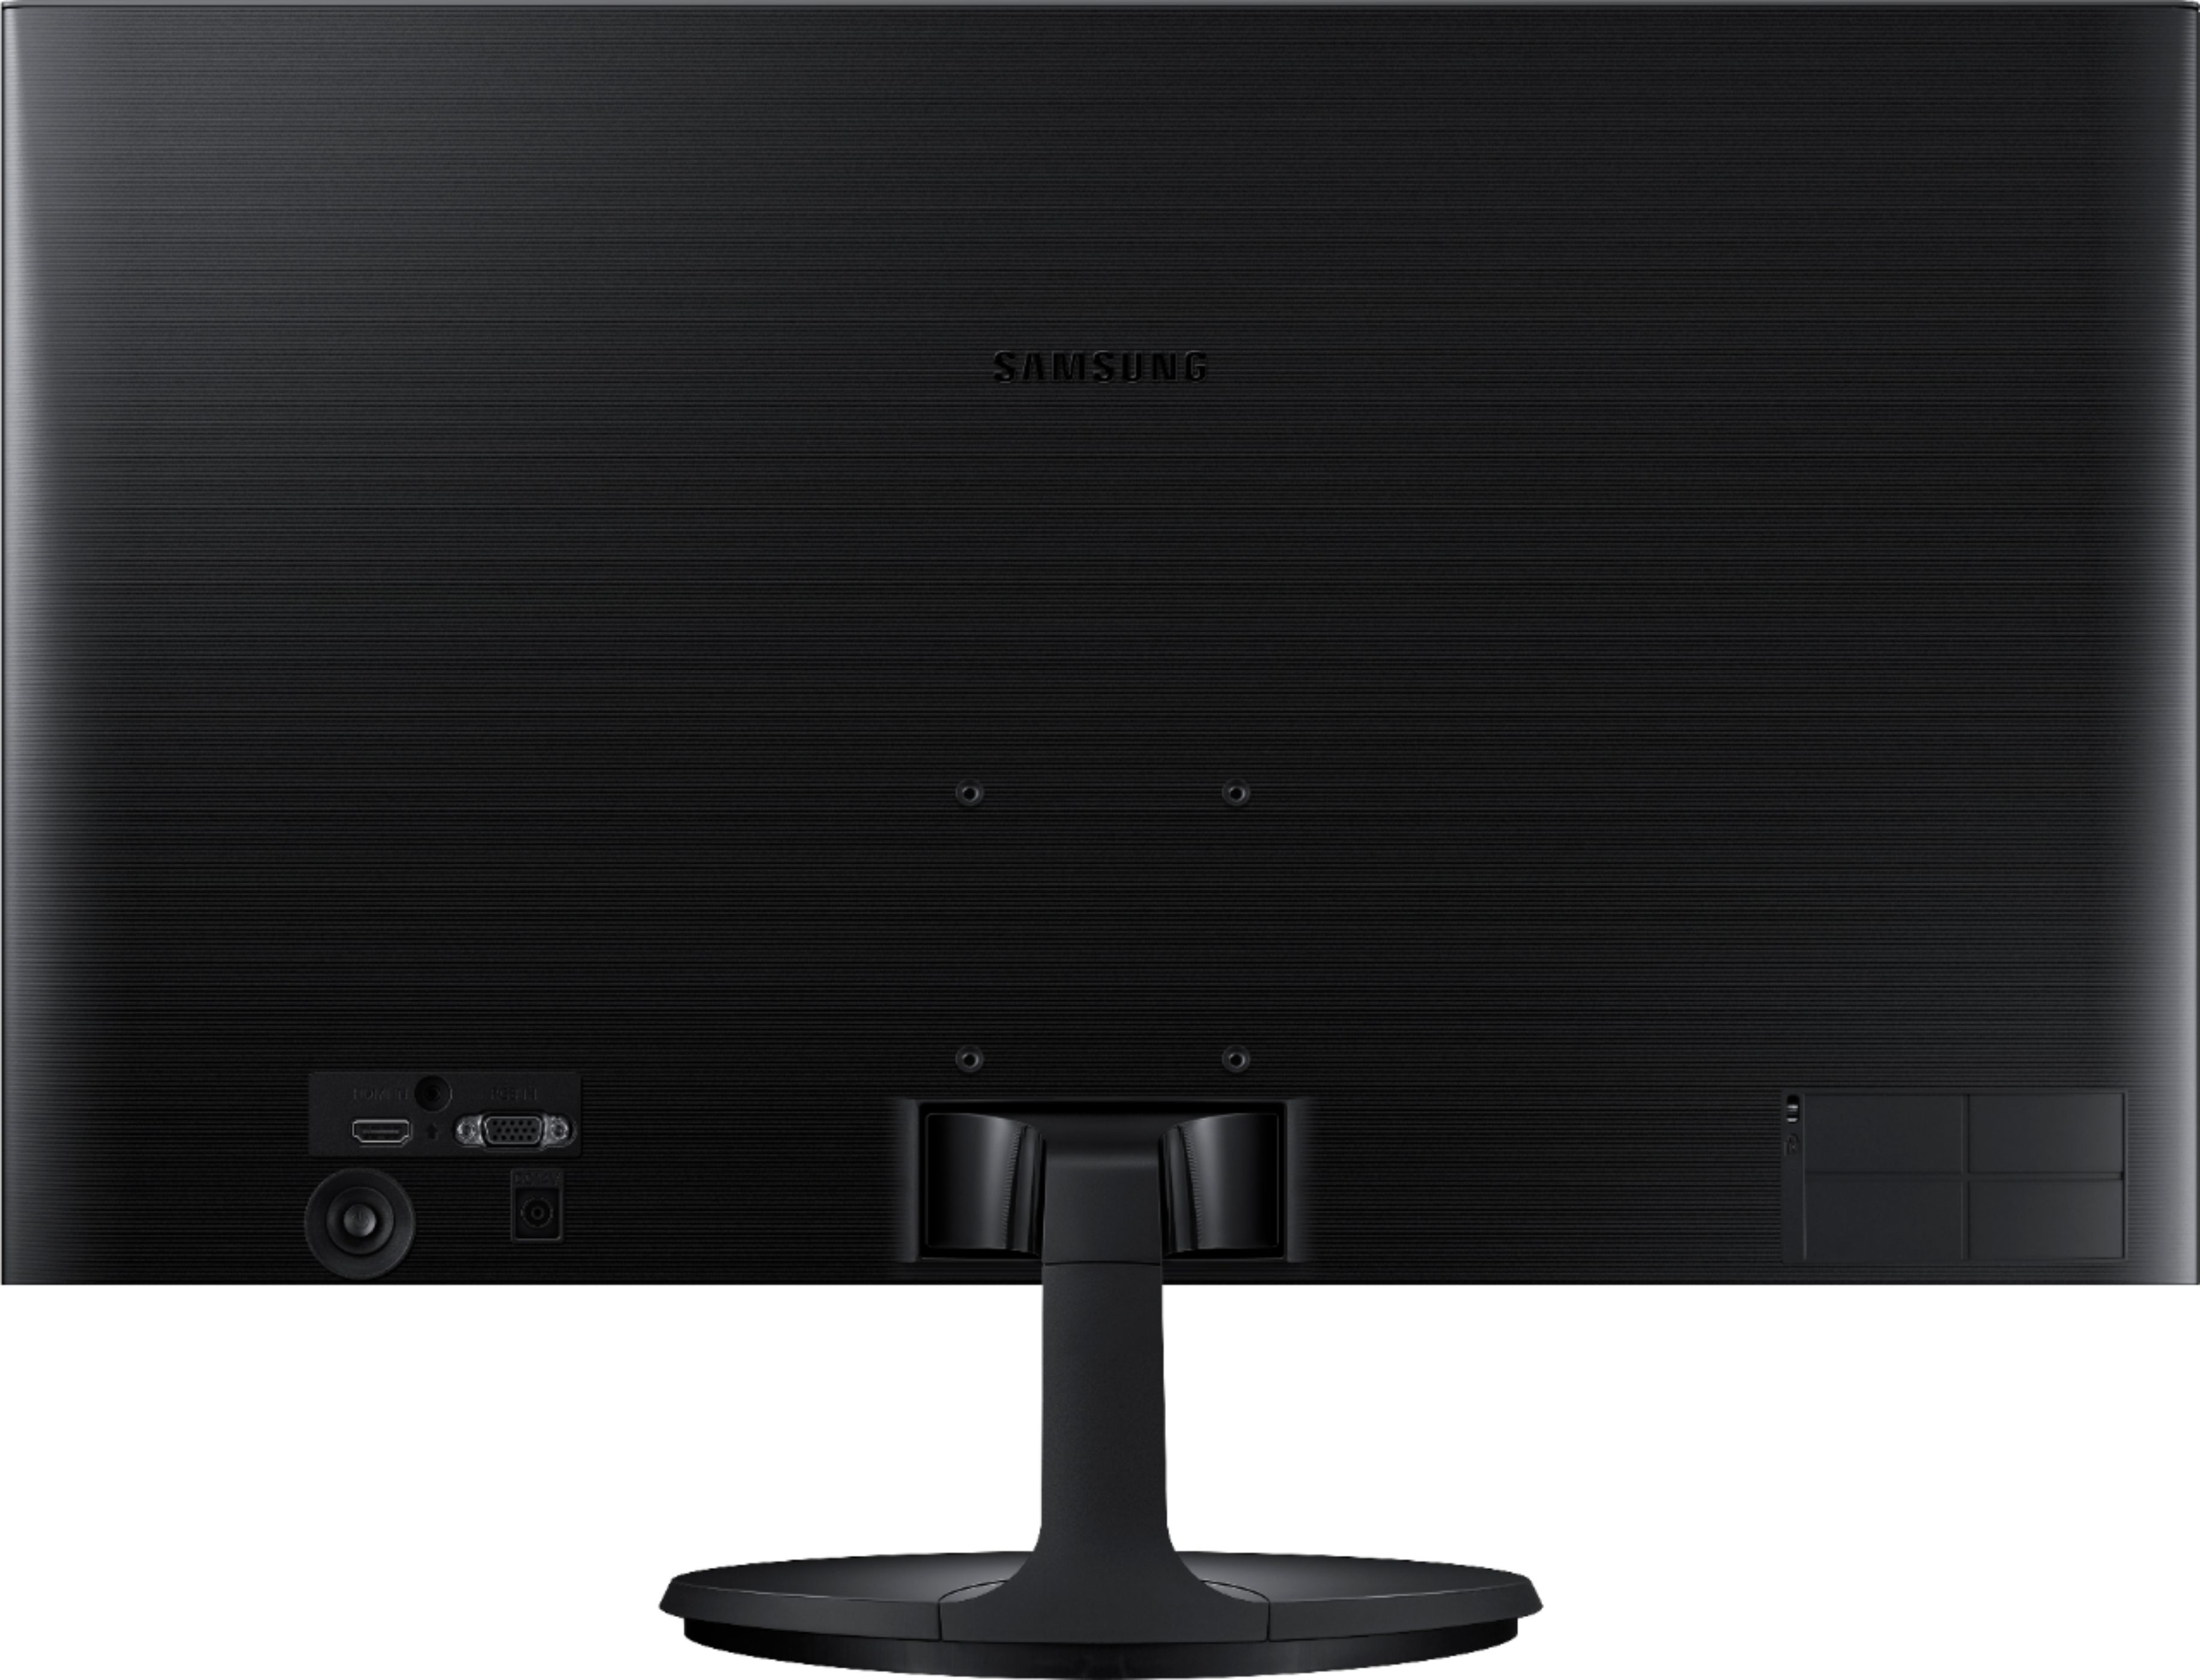 Best Buy: Samsung Series S24F350FHN 24" LED FHD FreeSync Monitor (HDMI, VGA) High Glossy Black S24F350